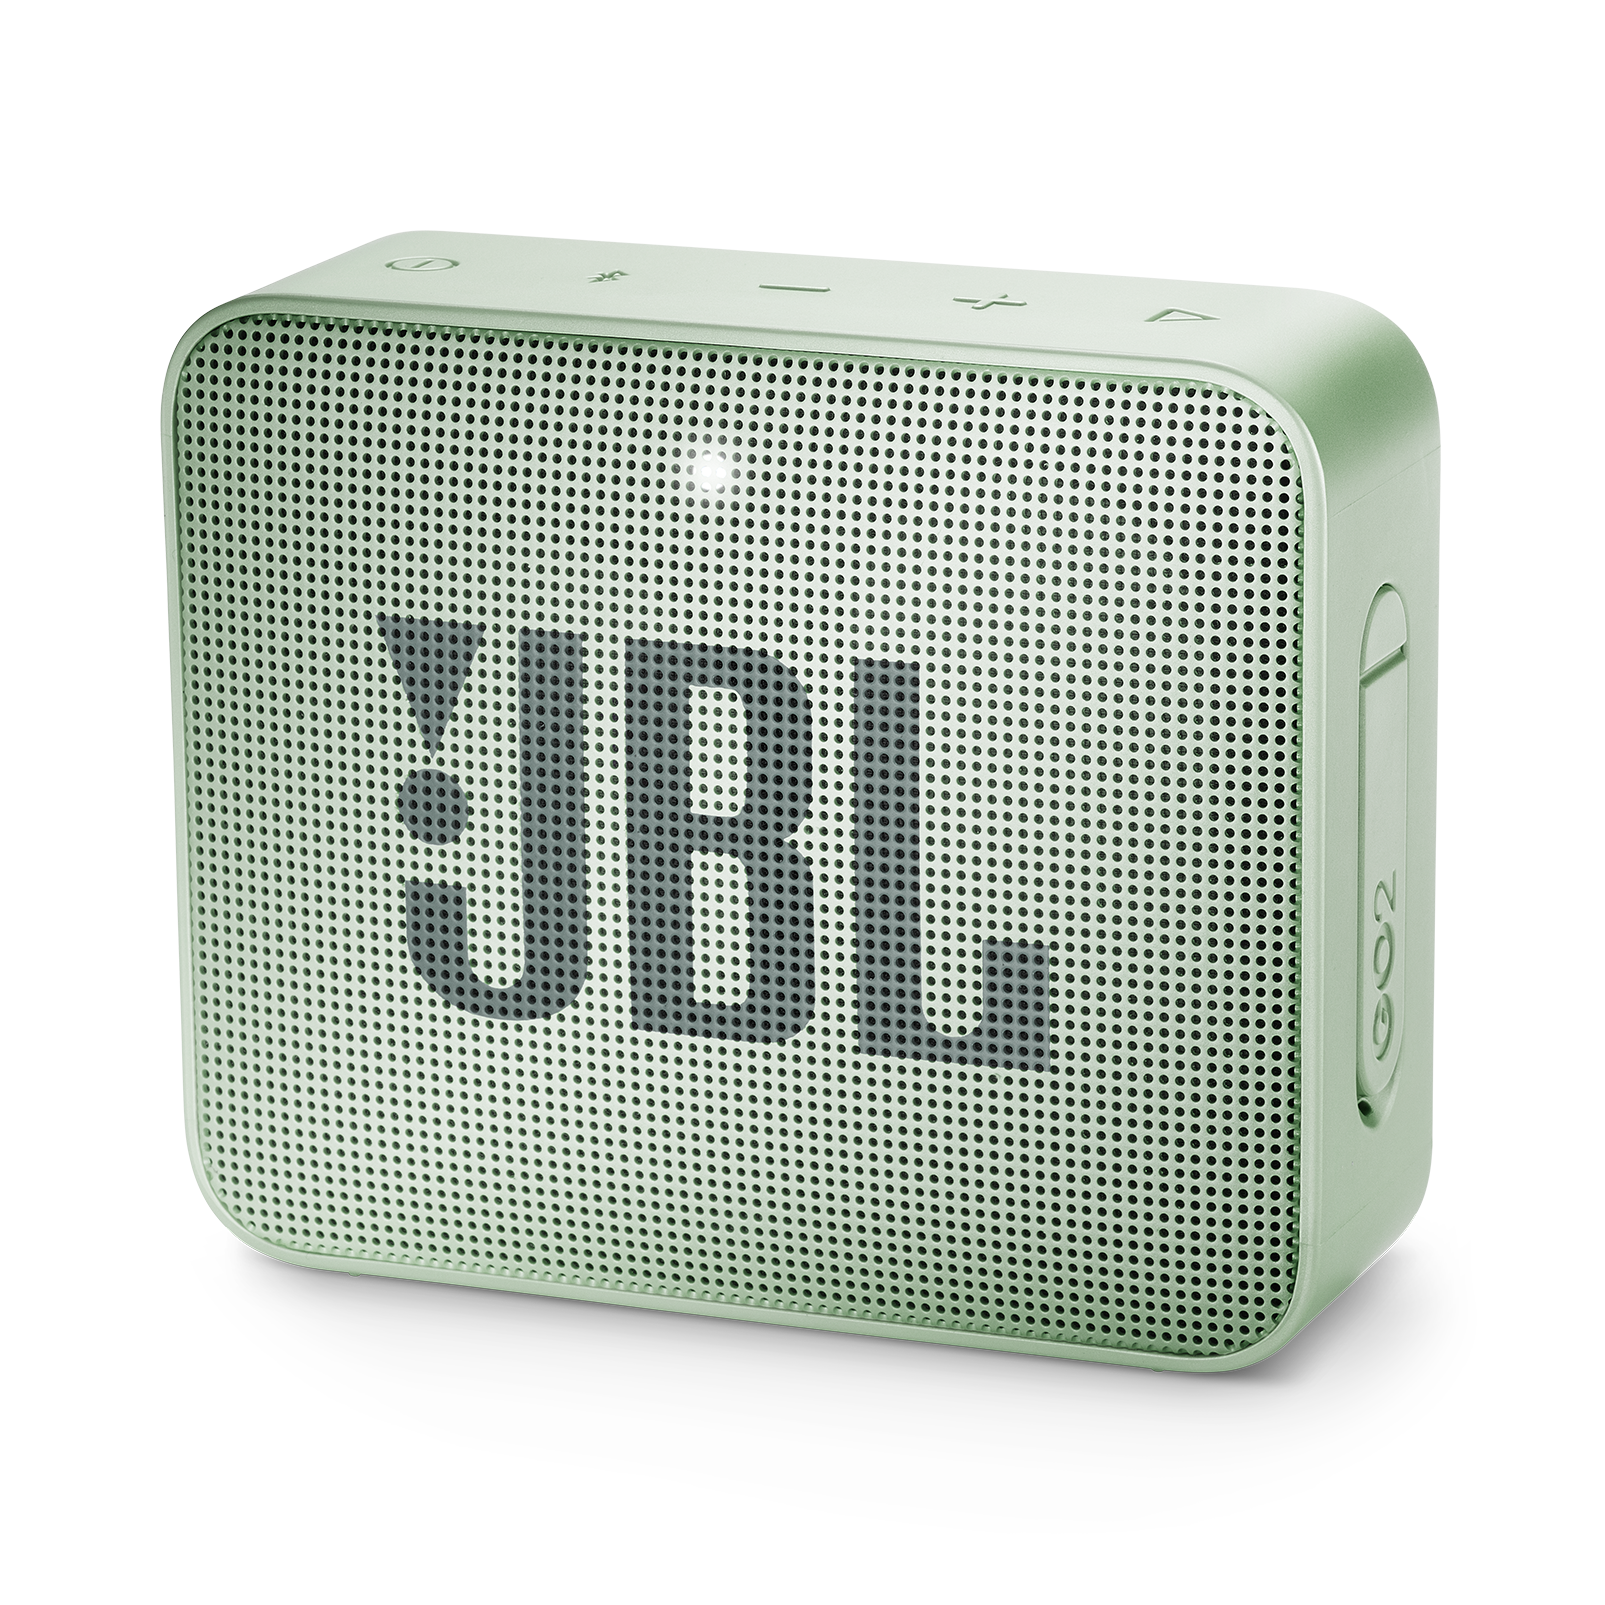 JBL Go 2 - Seafoam Mint - Portable Bluetooth speaker - Hero